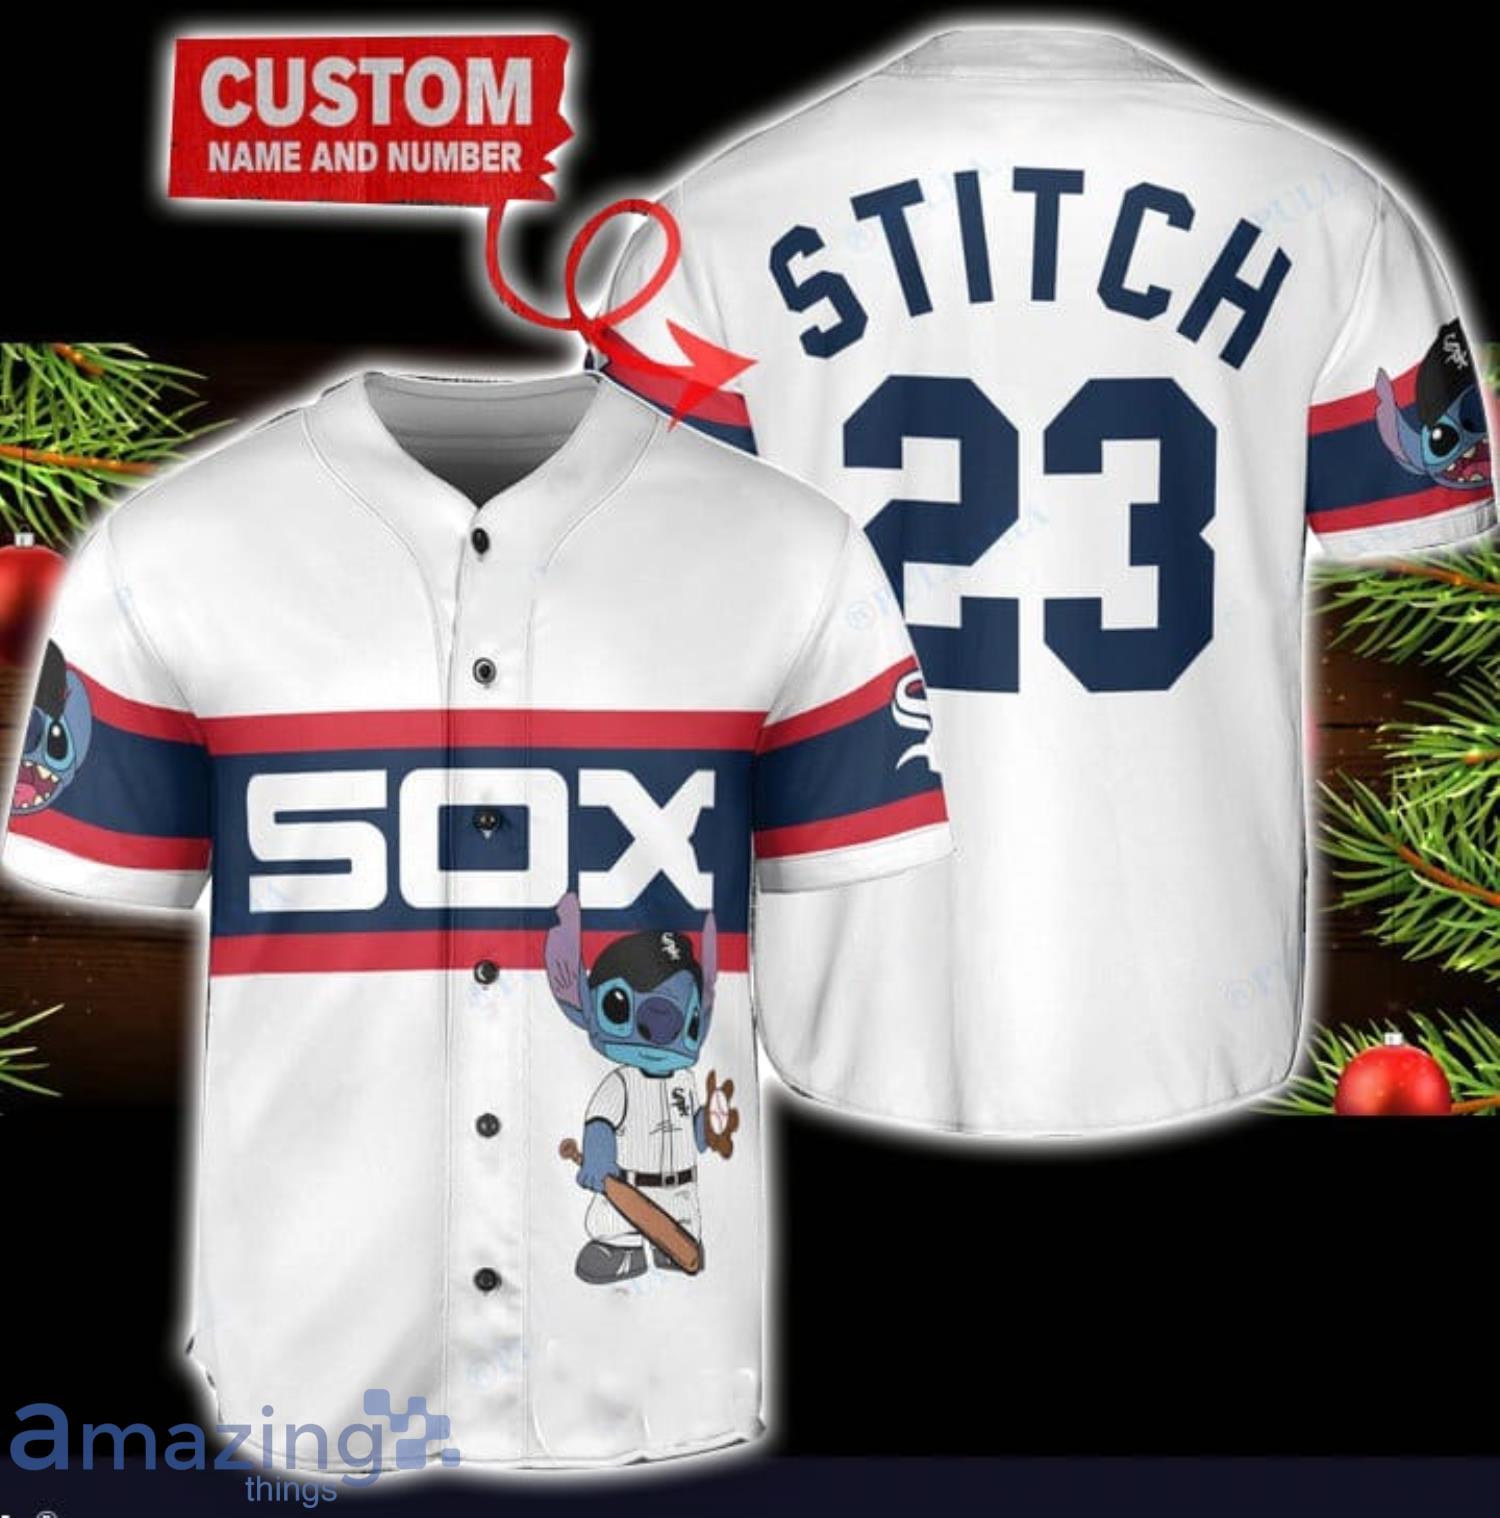 White Sox Jersey Shirt Personalized 